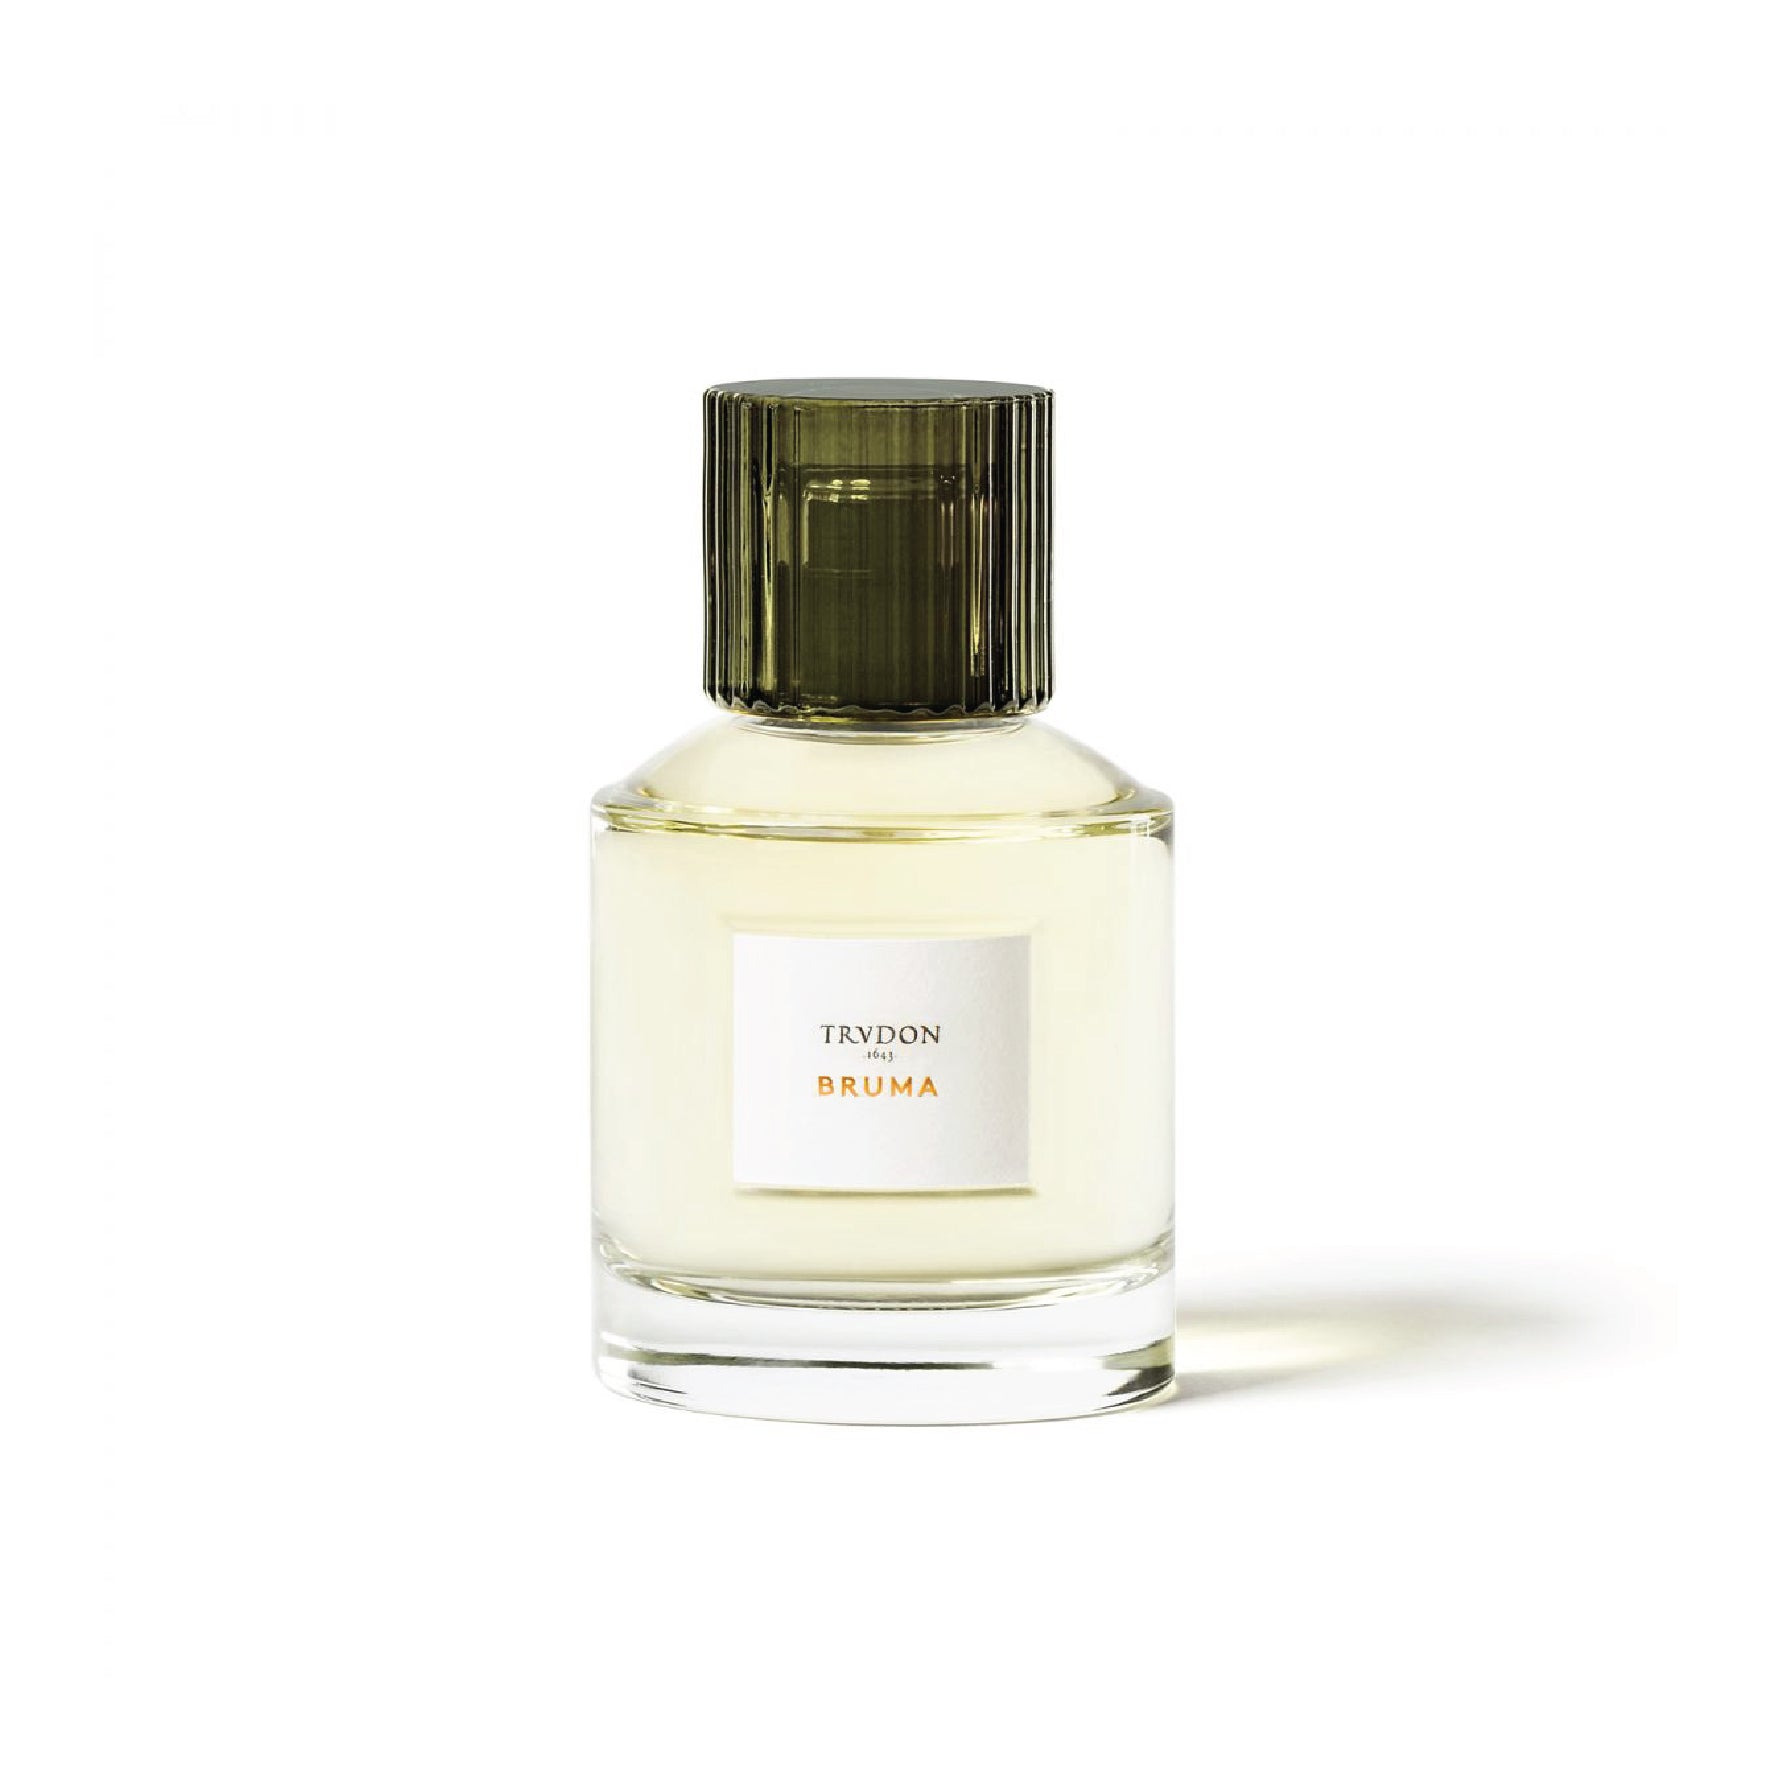 BRUMA Perfume 100ml 香水 Trudon